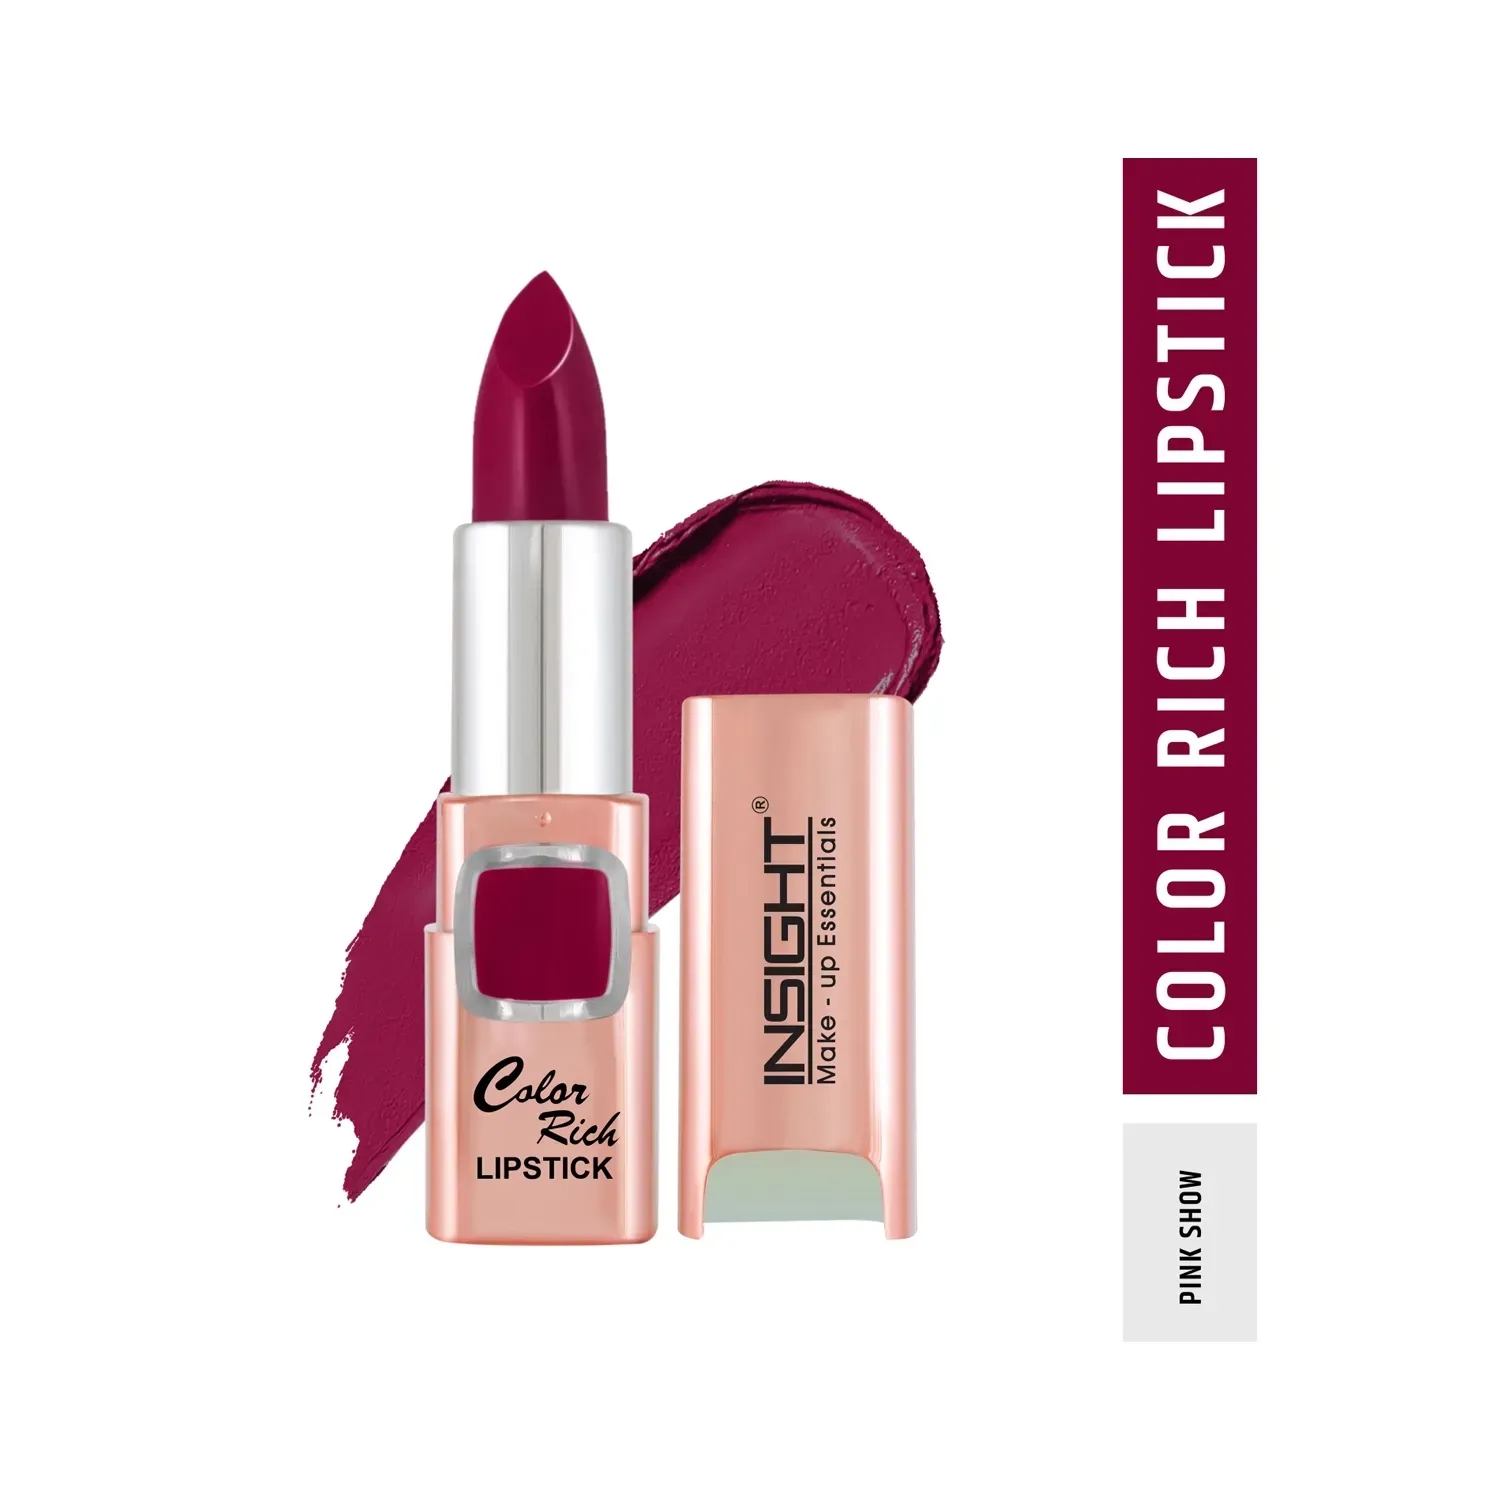 Insight Cosmetics | Insight Cosmetics Color Rich Lipstick - Pink Show (4.2g)